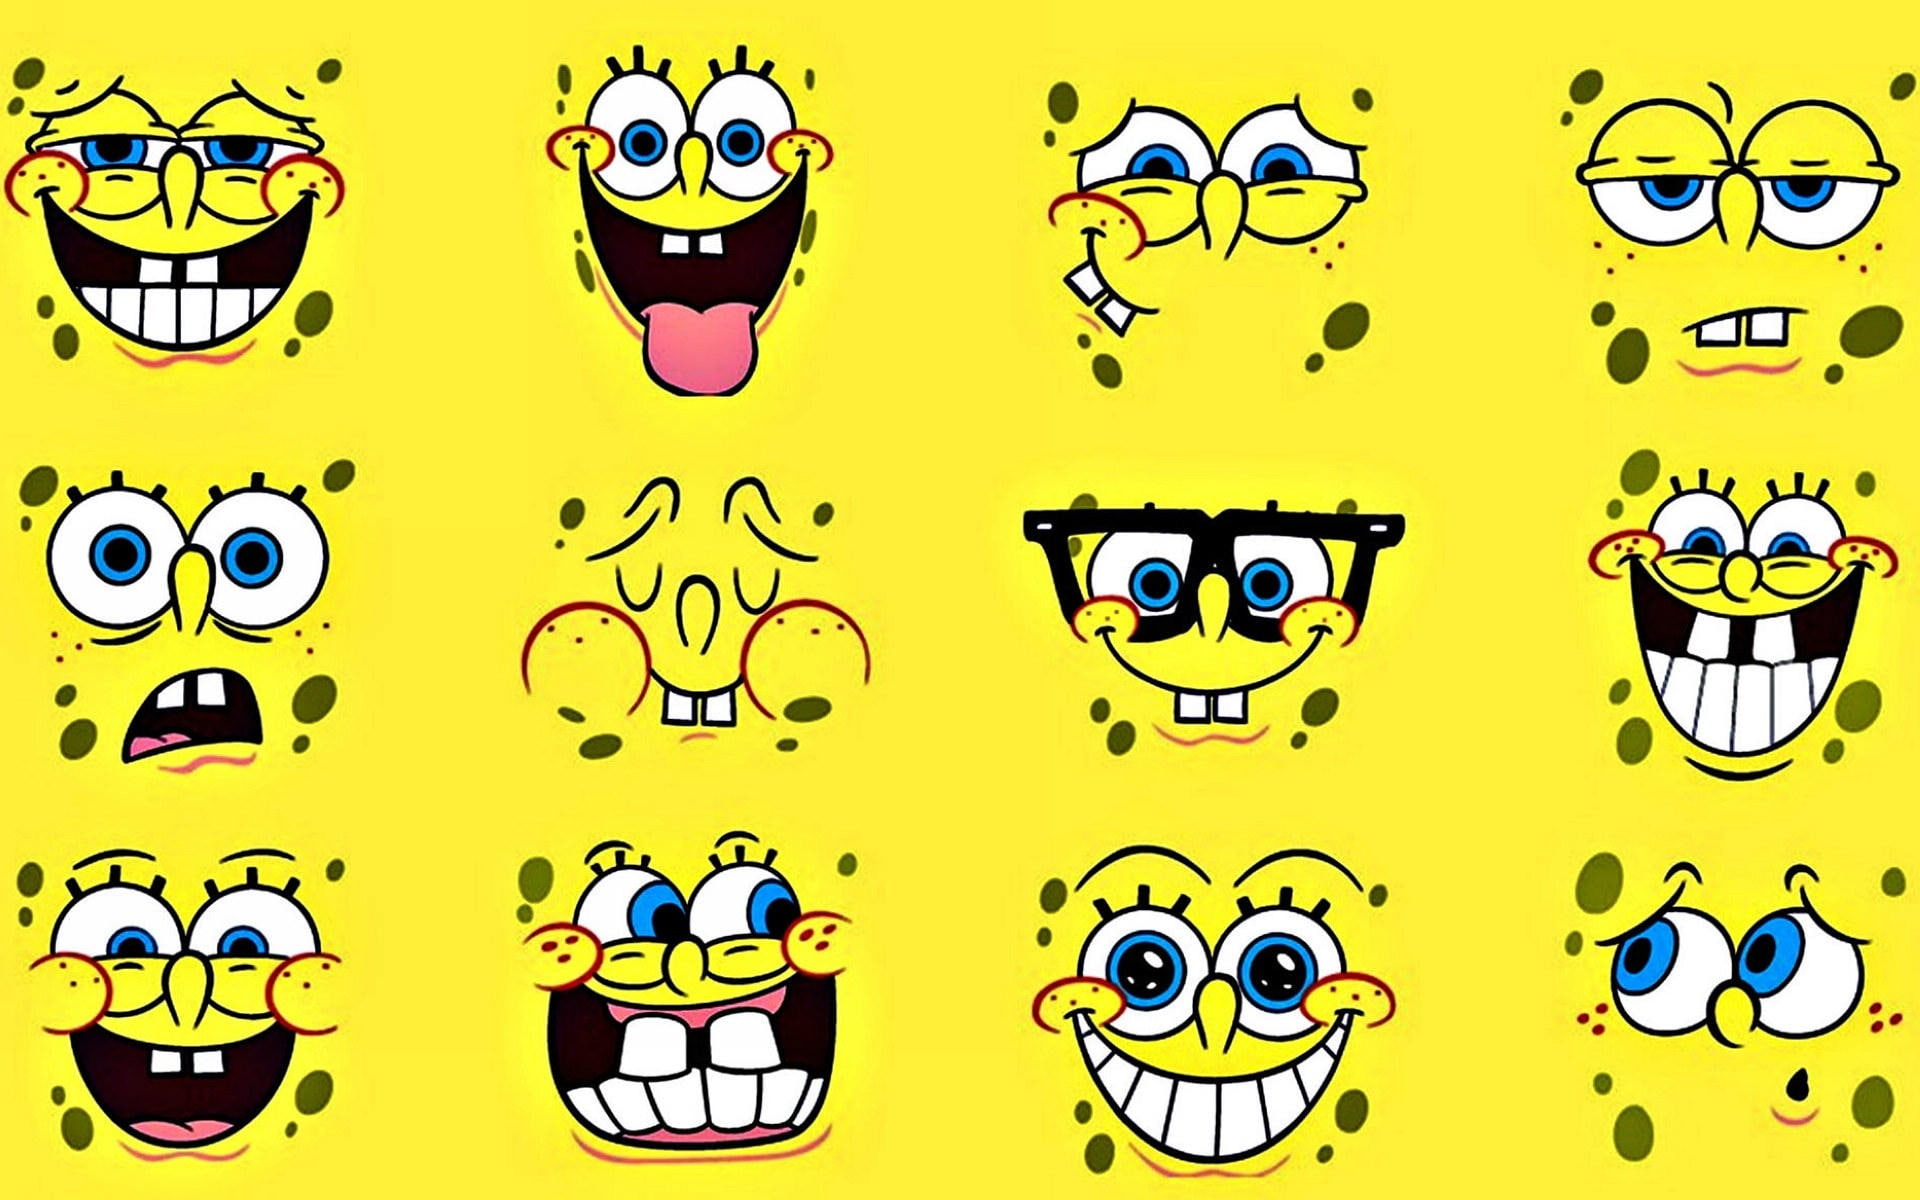 SpongeBob Cartoon Characters Design Desktop Wallpa.., SpongeBob SquarePants faces illustration